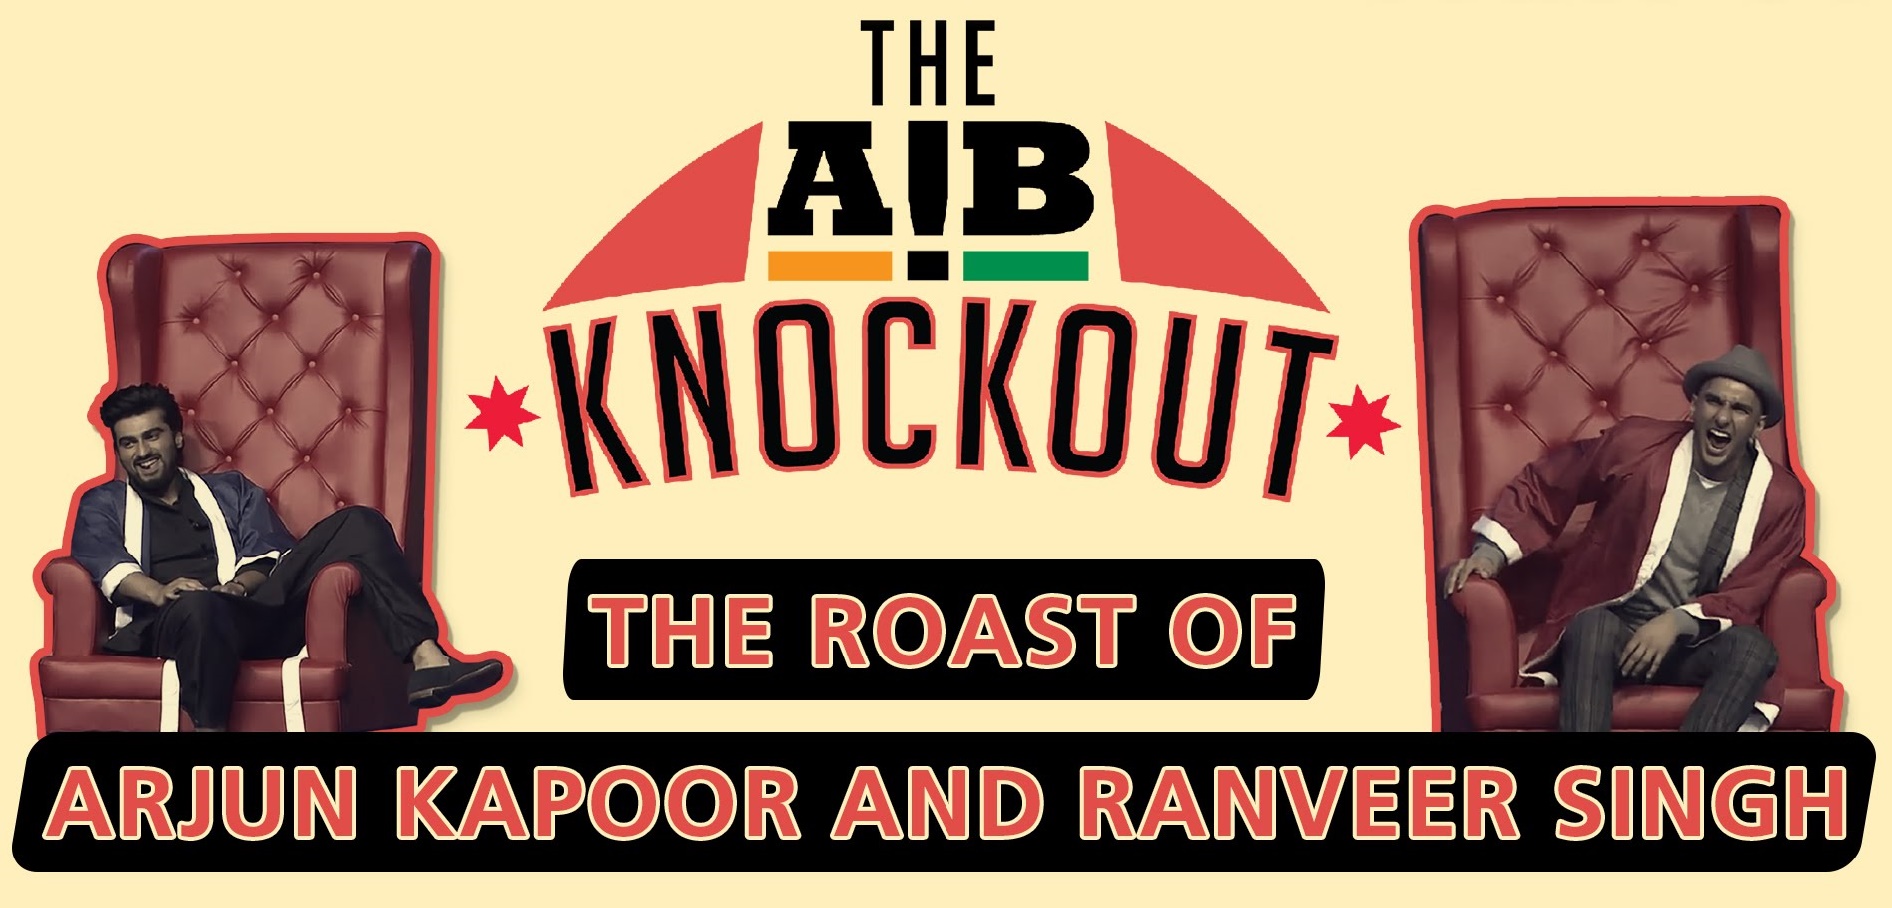 AIB Knockout